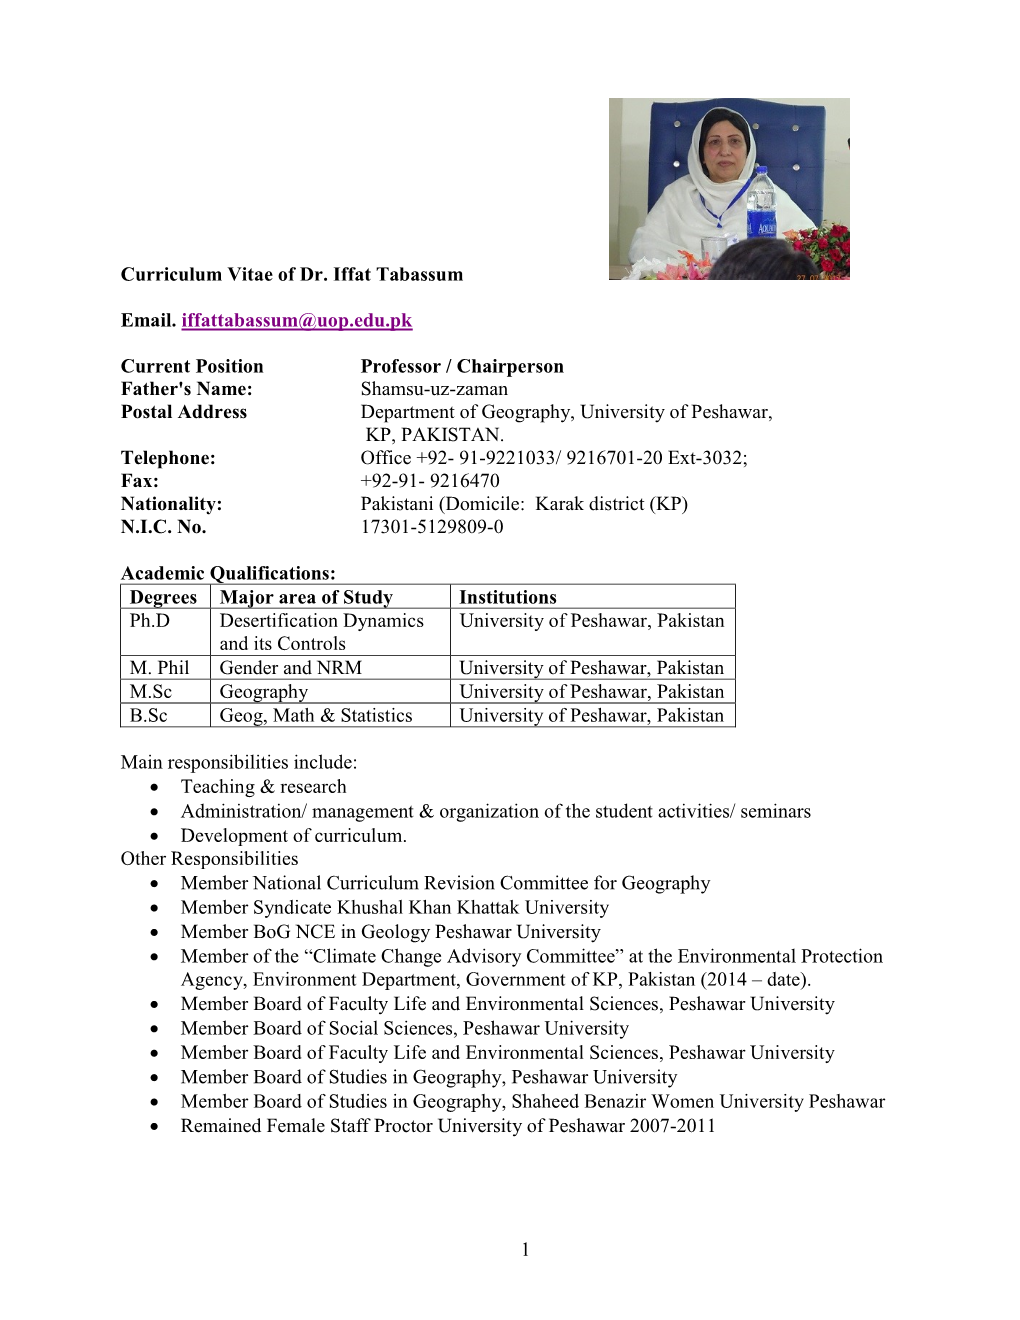 1 Curriculum Vitae of Dr. Iffat Tabassum Email. Iffattabassum@Uop.Edu.Pk Current Position Professor / Chairperson Father's N